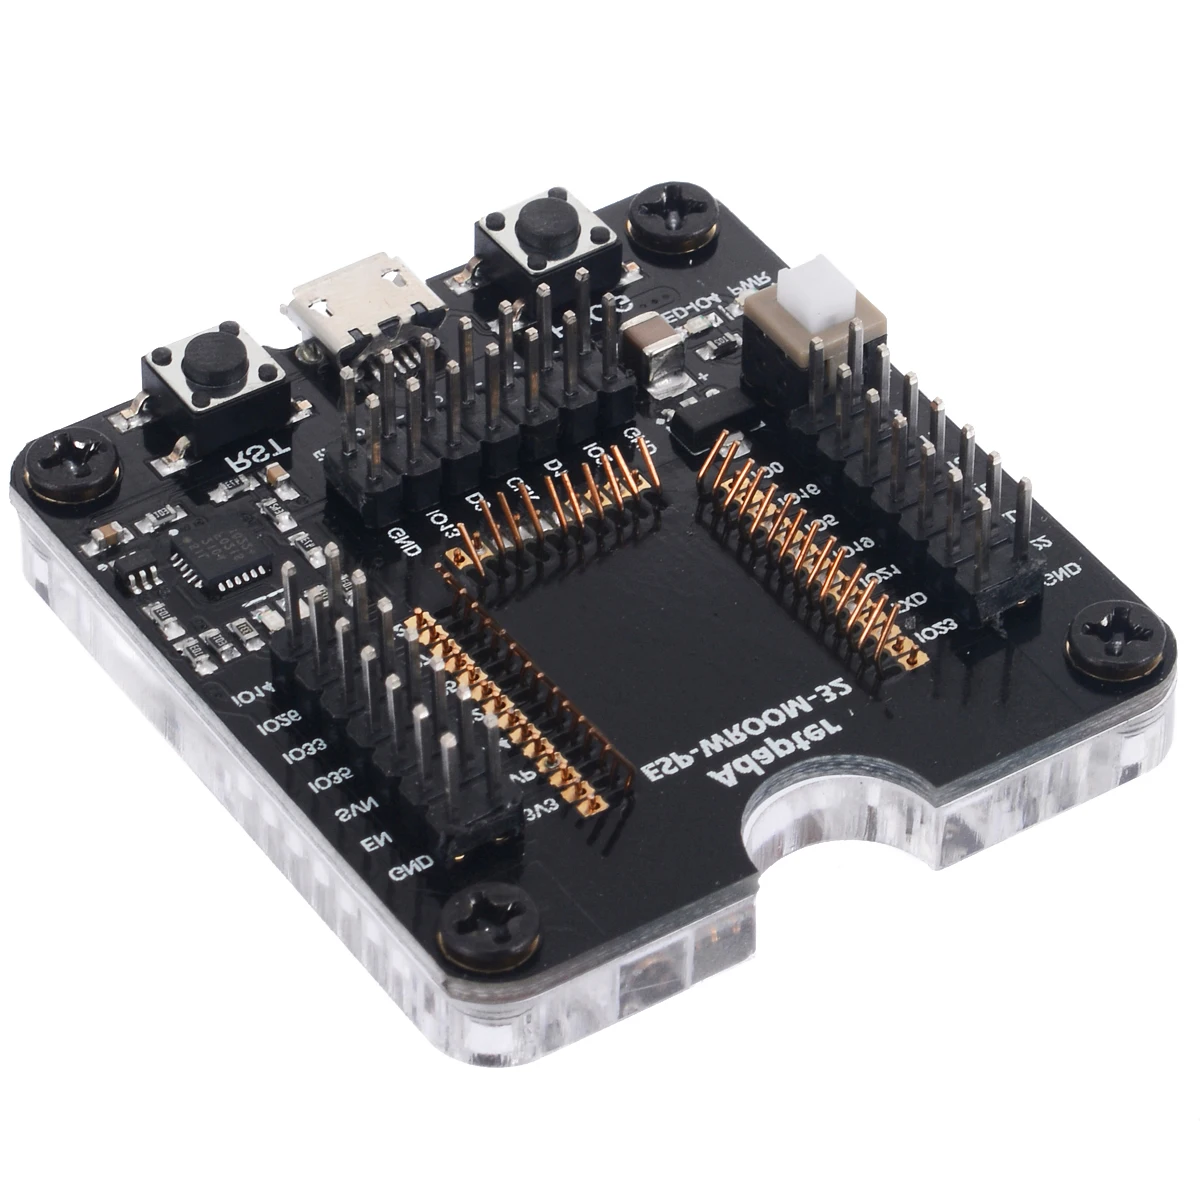 Programmer Tool ESP32 Adapter Socket Kit For ESPRESSIF ESP-WROOM-32 ModulIJUSHCN